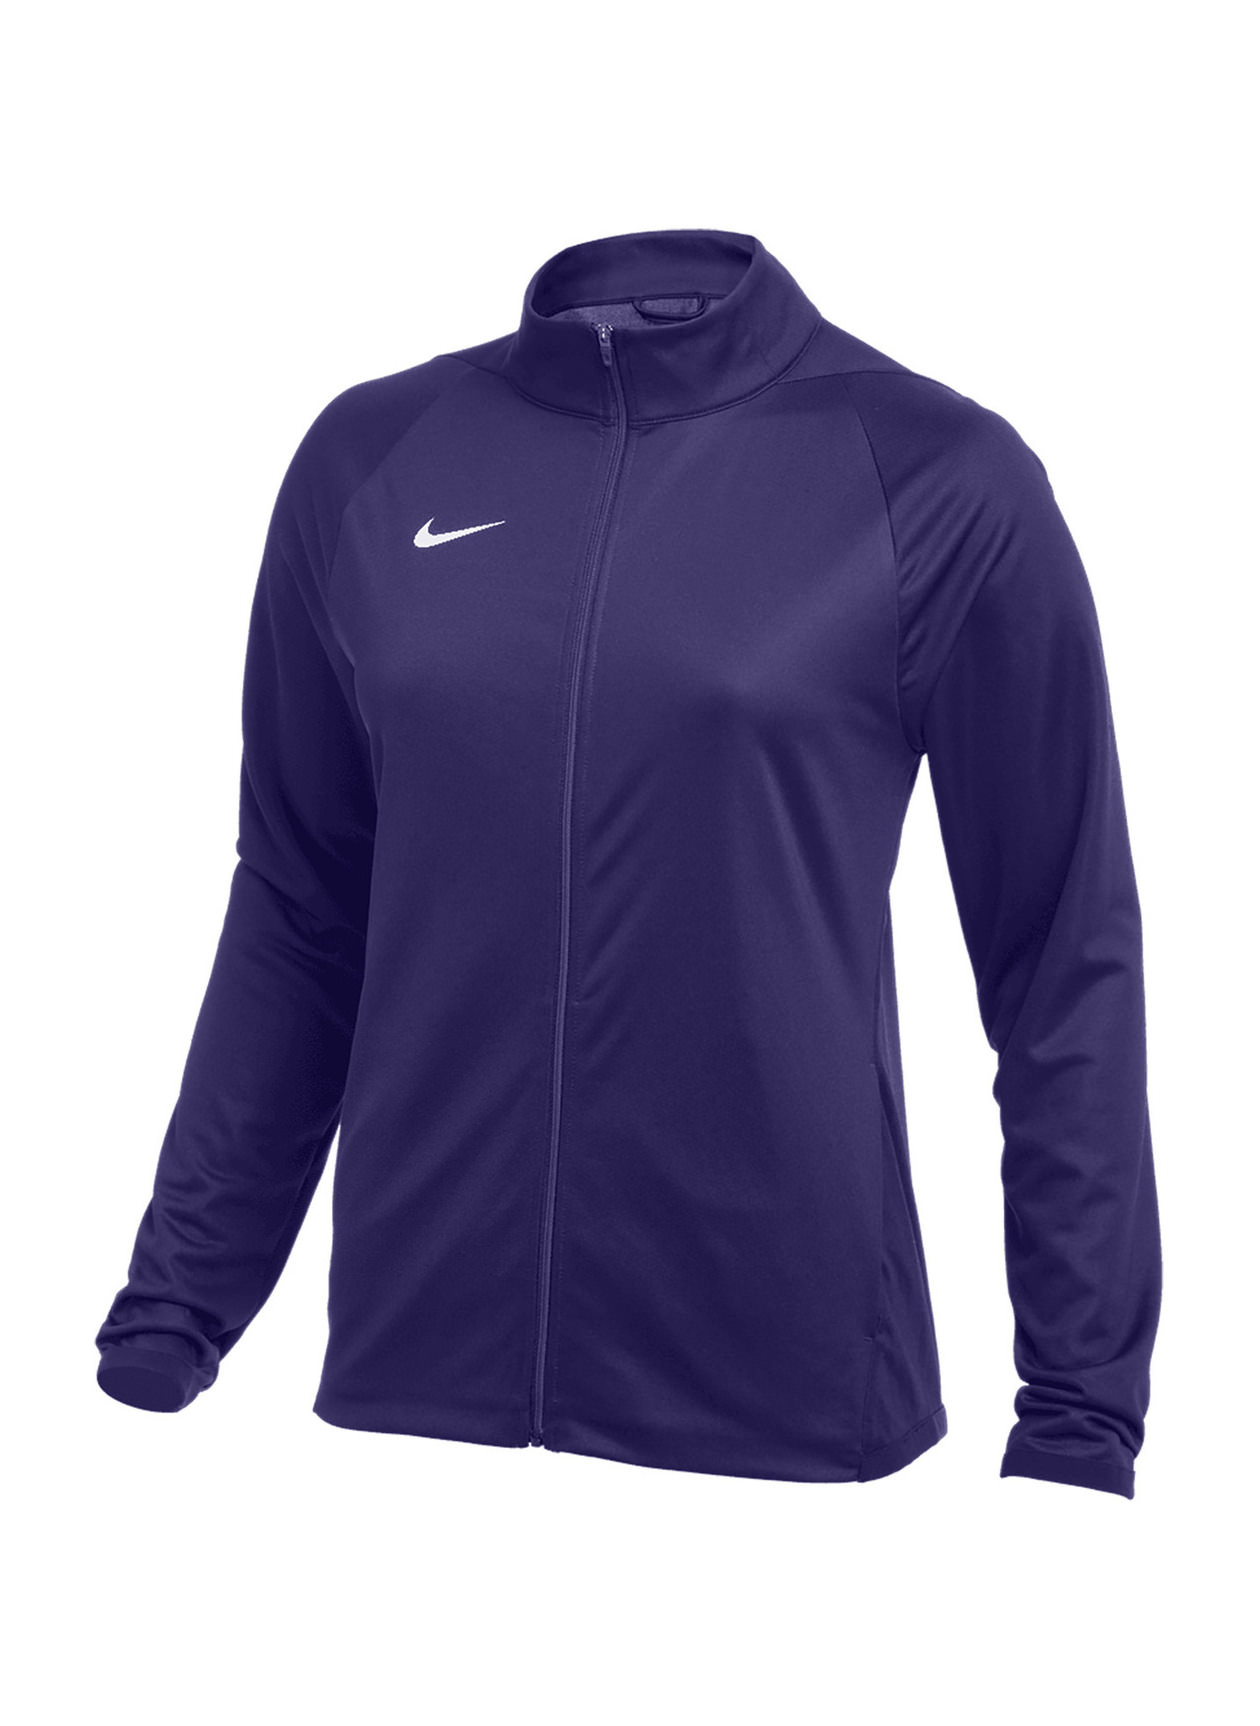 Women's Nike Epic Knit Jacket 2.0 Team Purple / White